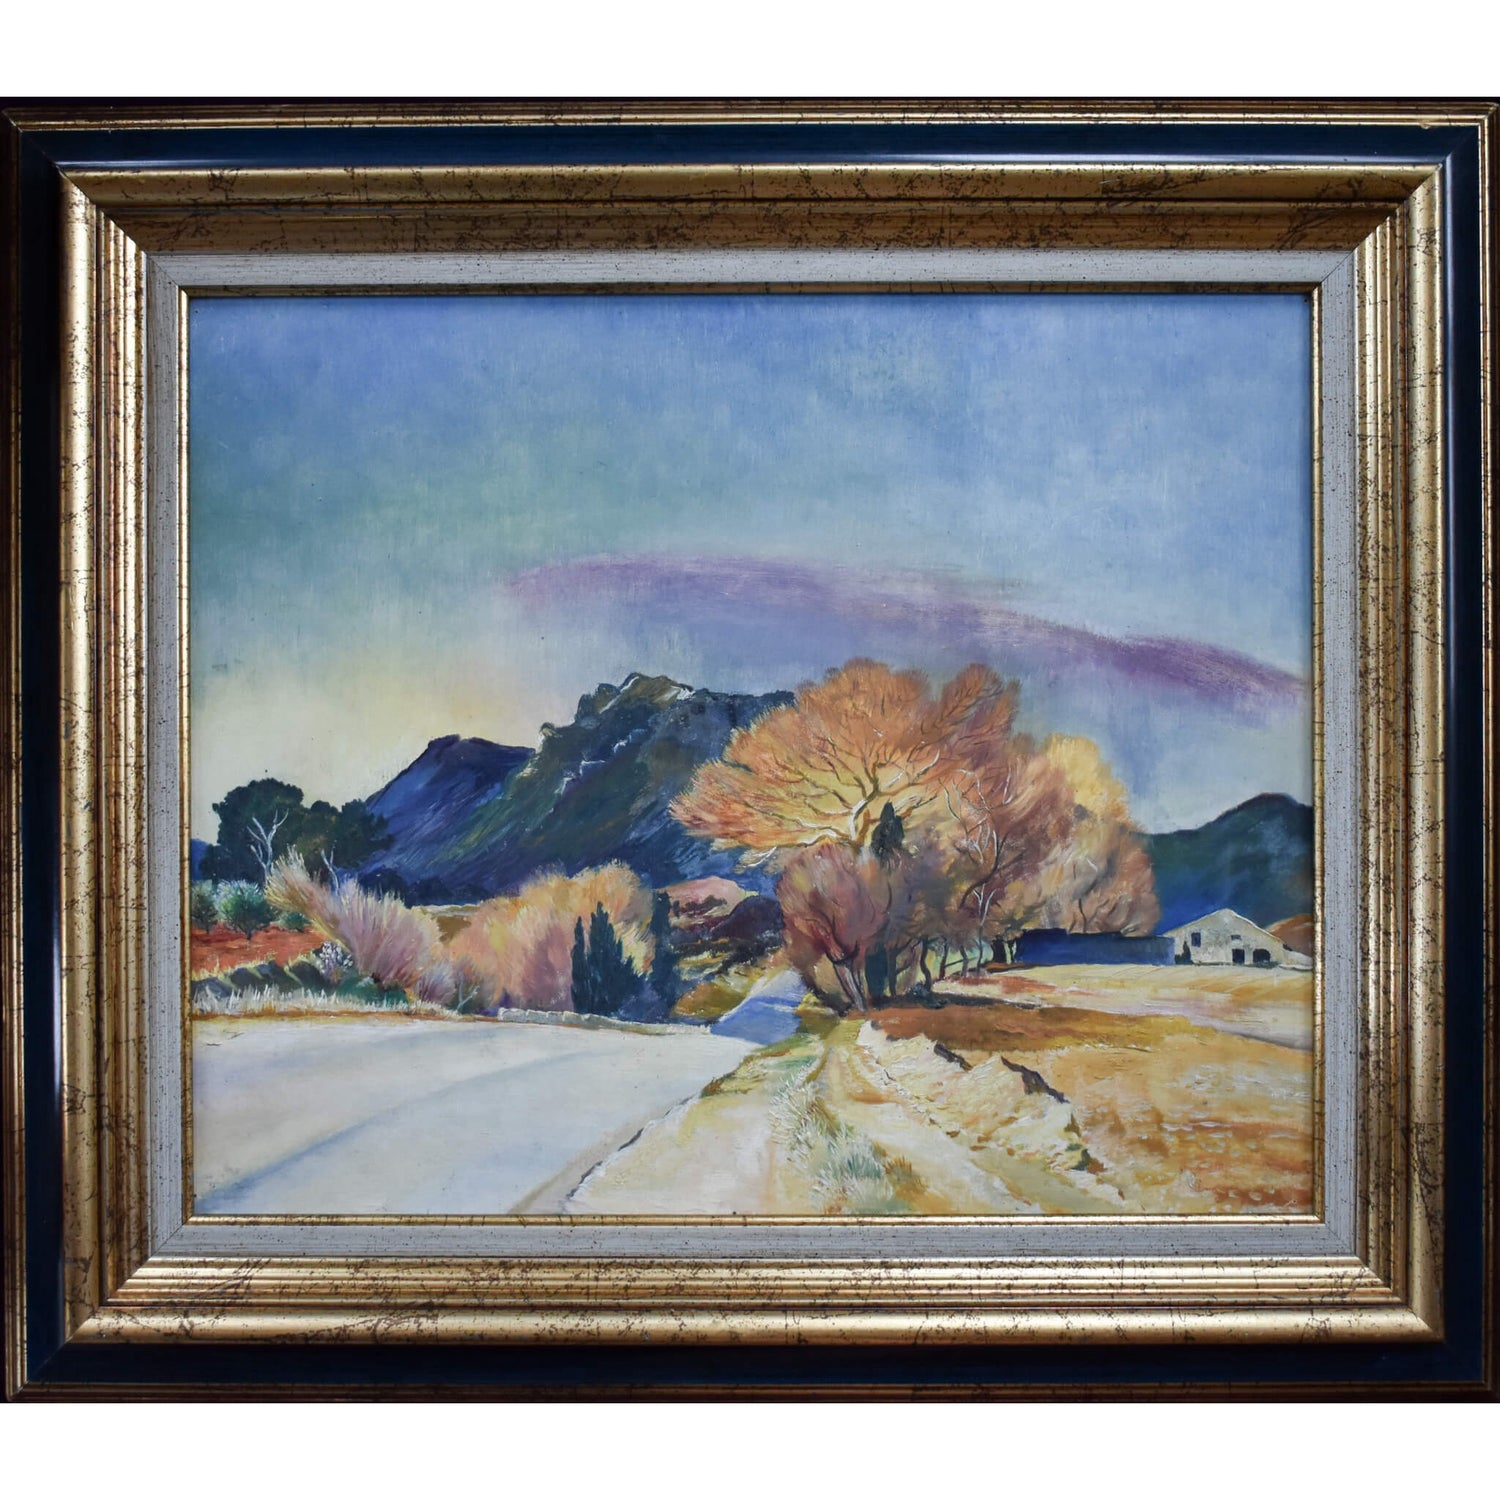 Vintage landscape oil painting Jura mountains view original 1951 by Sine Mackinnon for sale at Winckelmann Gallery